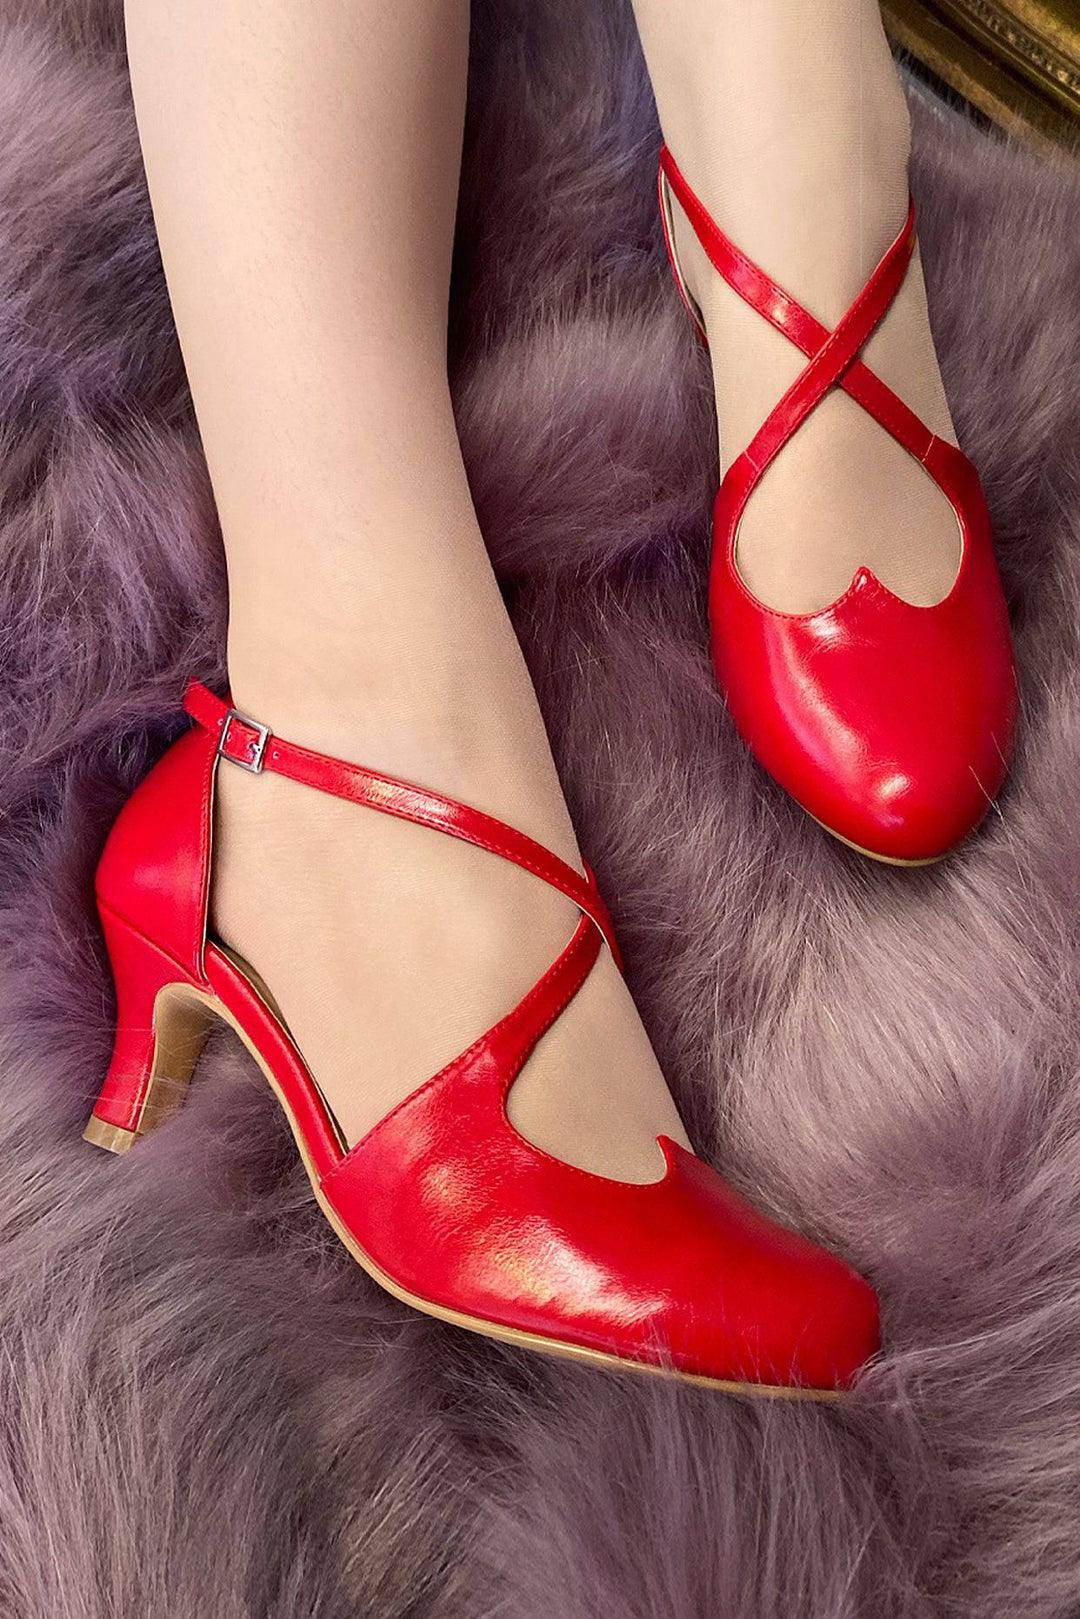 Vixen Petite Shoe (Red) - Kitten D'Amour